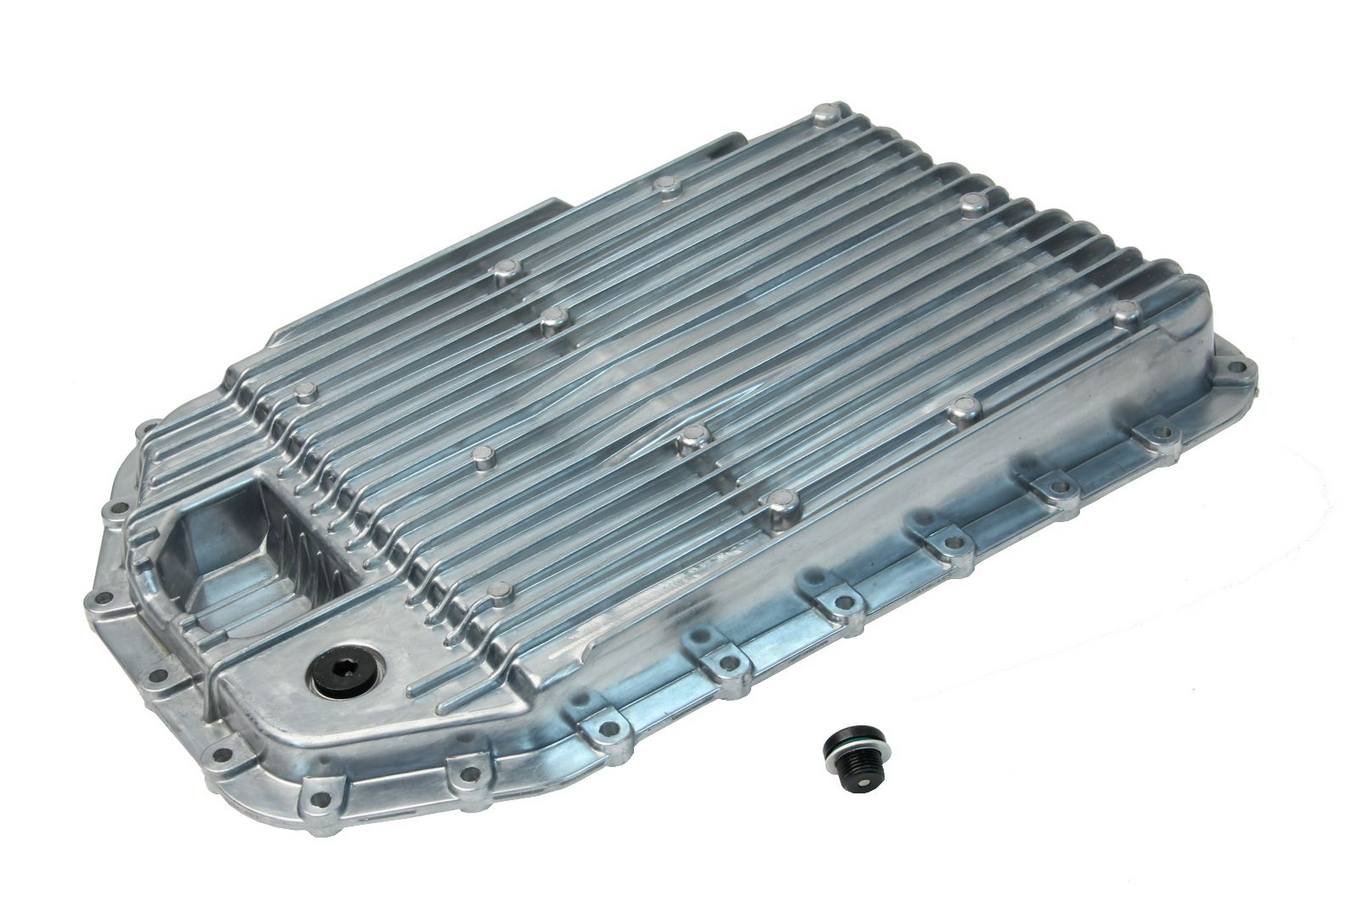 BMW Auto Trans Oil Pan (w/ Filter) (Aluminum) 24152333907 - URO Parts 24152333907PRM